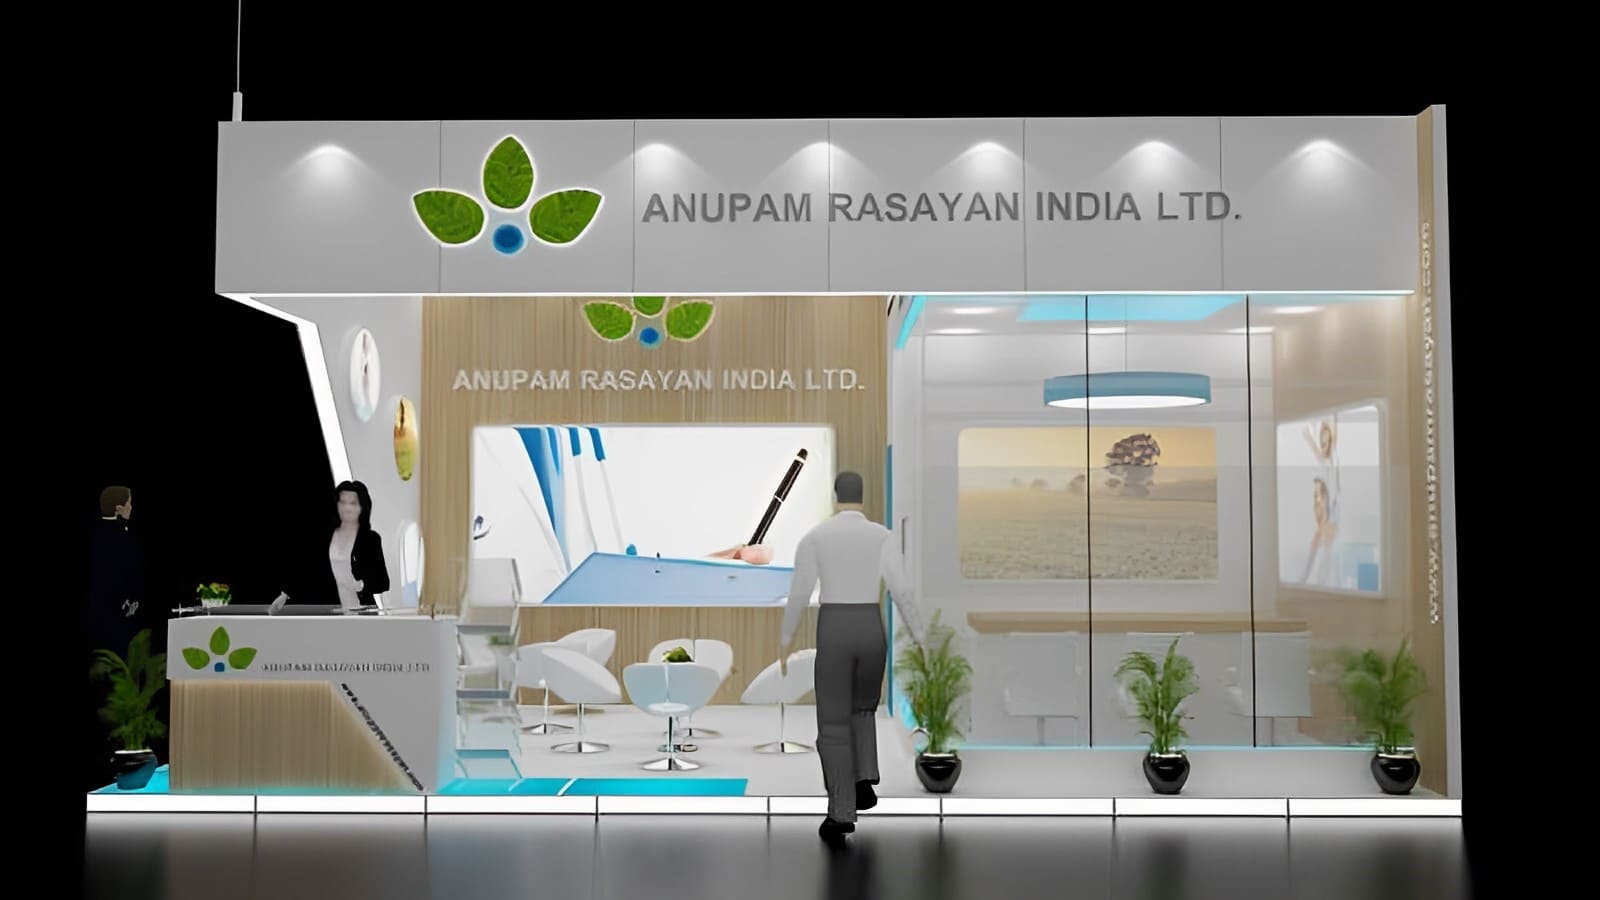 Anupam Rasayan Invests Rs 670 Cr to Establish 3 New Gujarat Plants